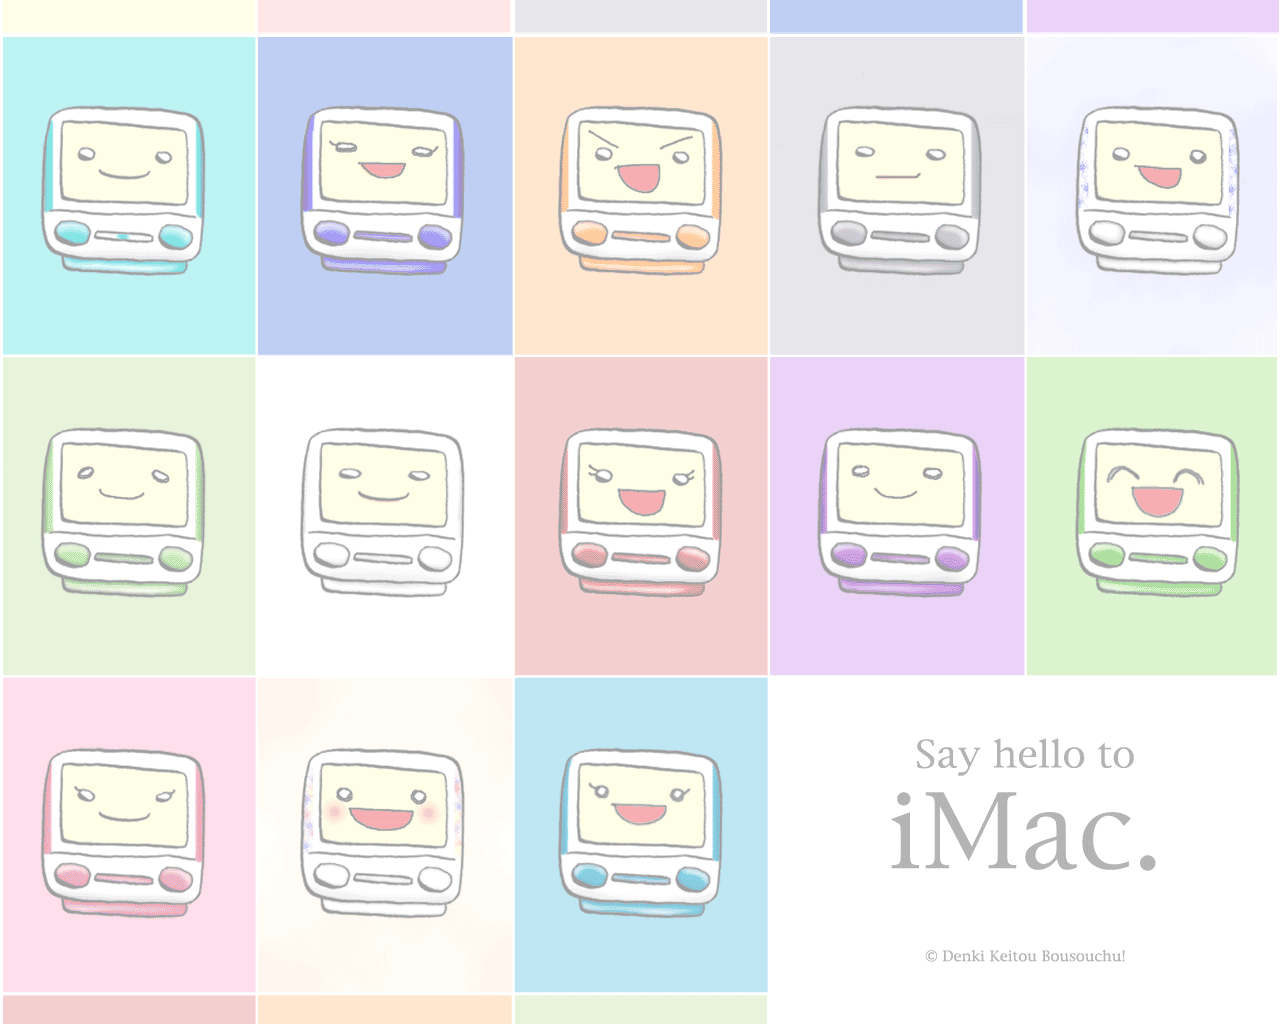 Macの4コママンガサイト デンキケイトウボウソウチュウ 壁紙